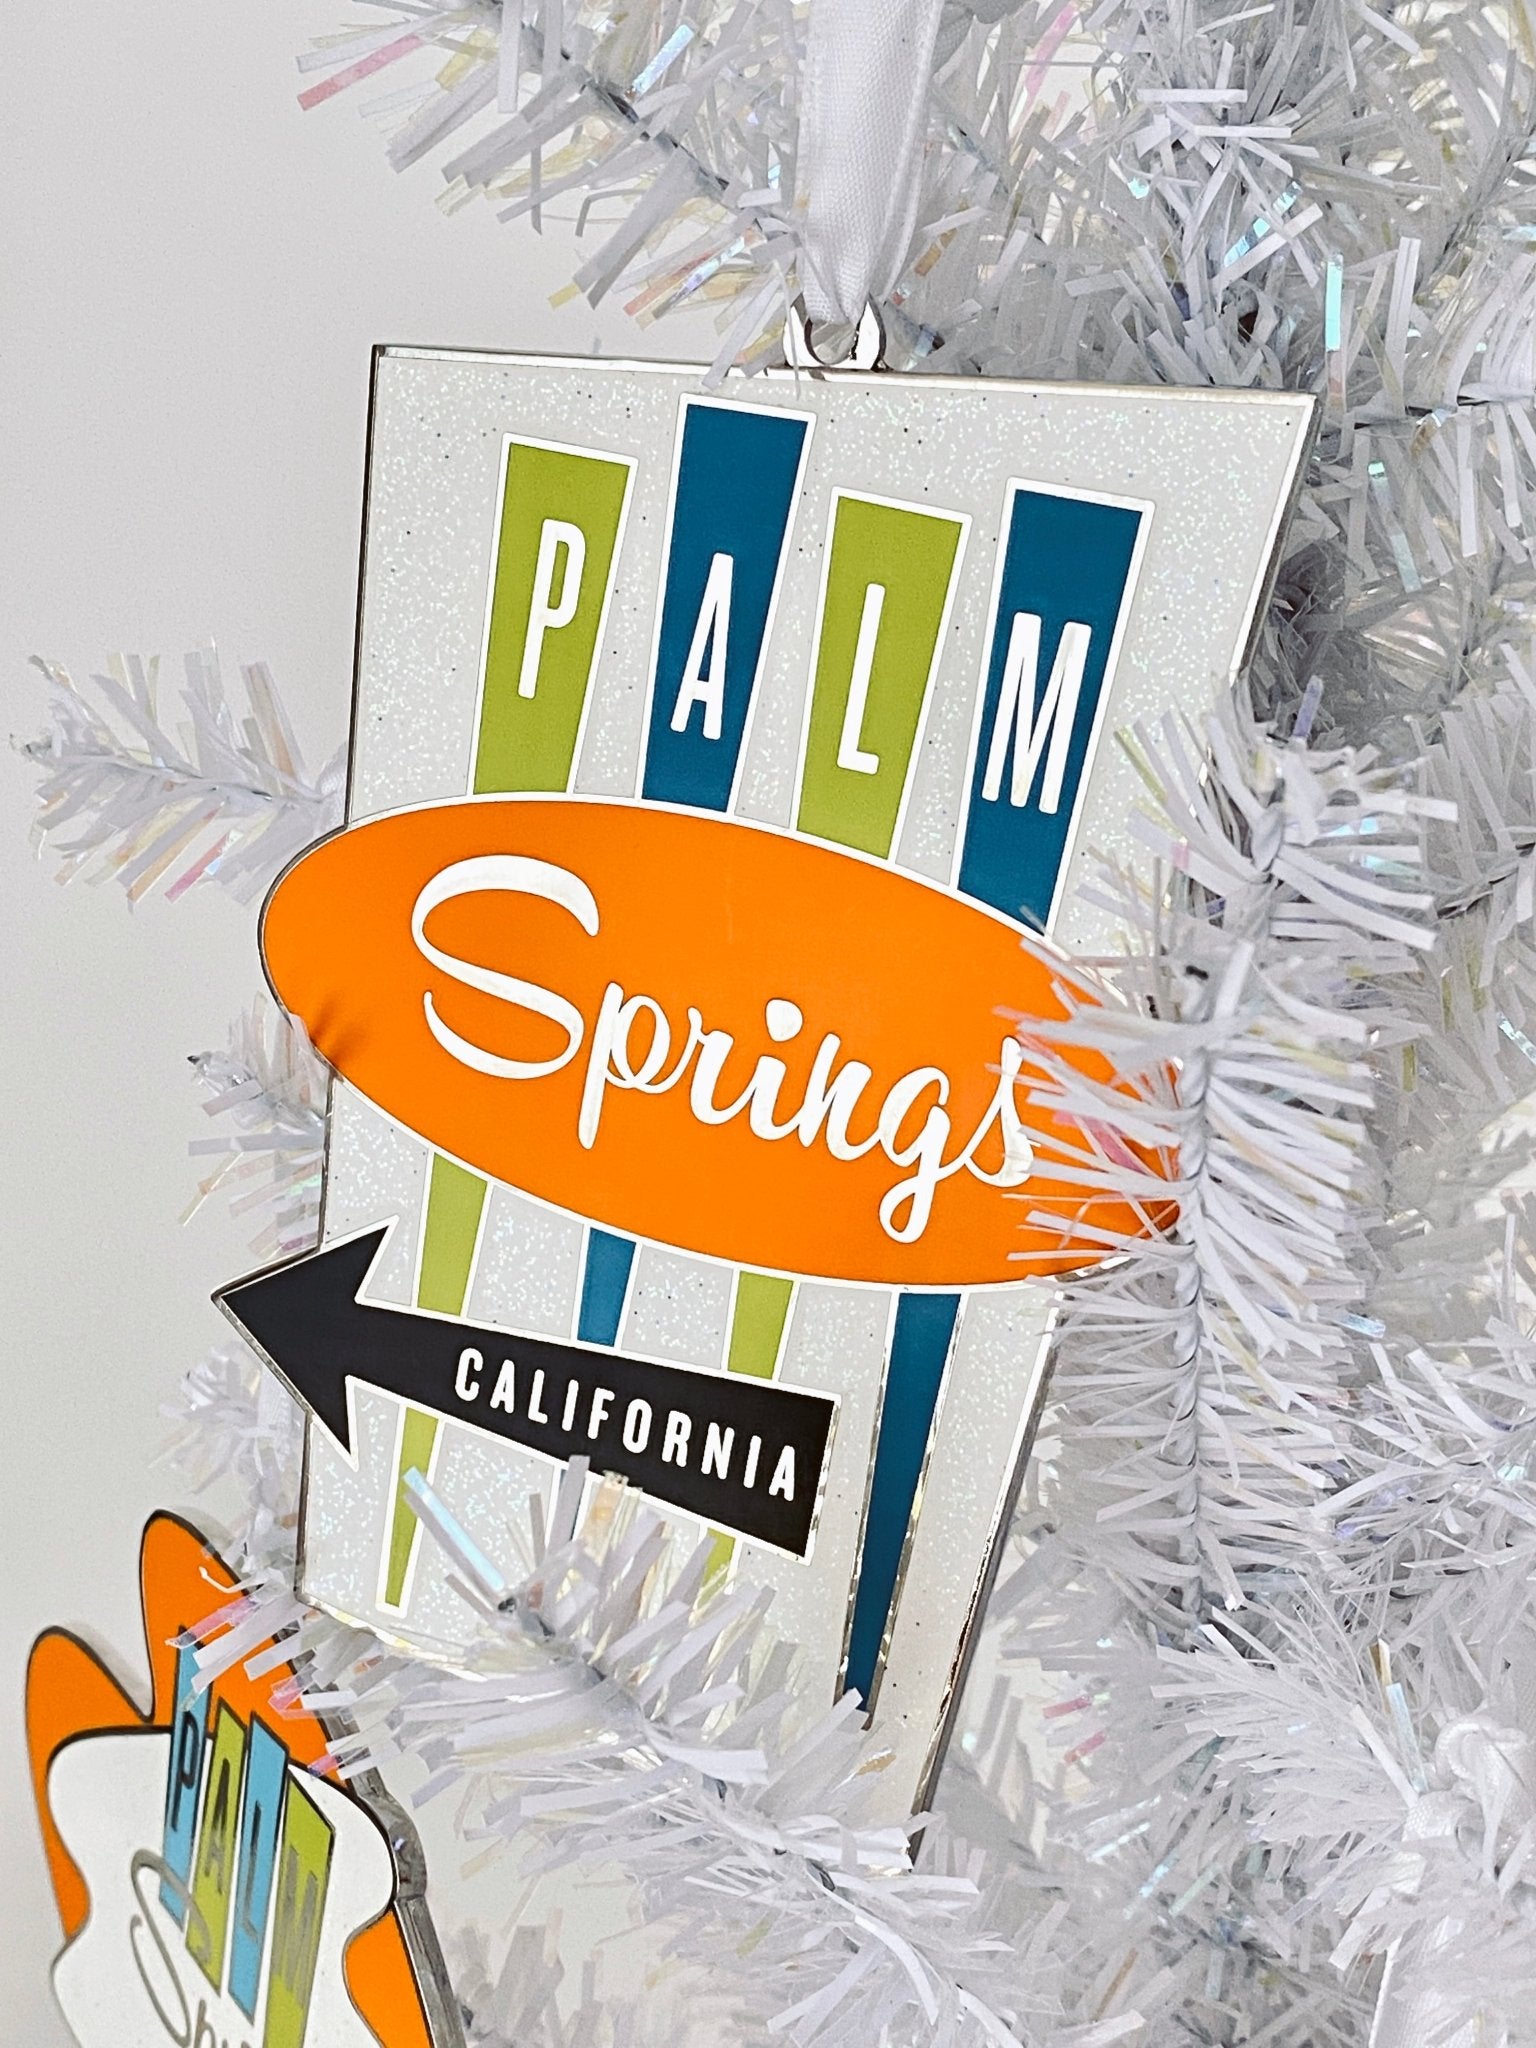 Cloisonne Holiday Ornament - Palm Springs Sign Design - Destination PSP